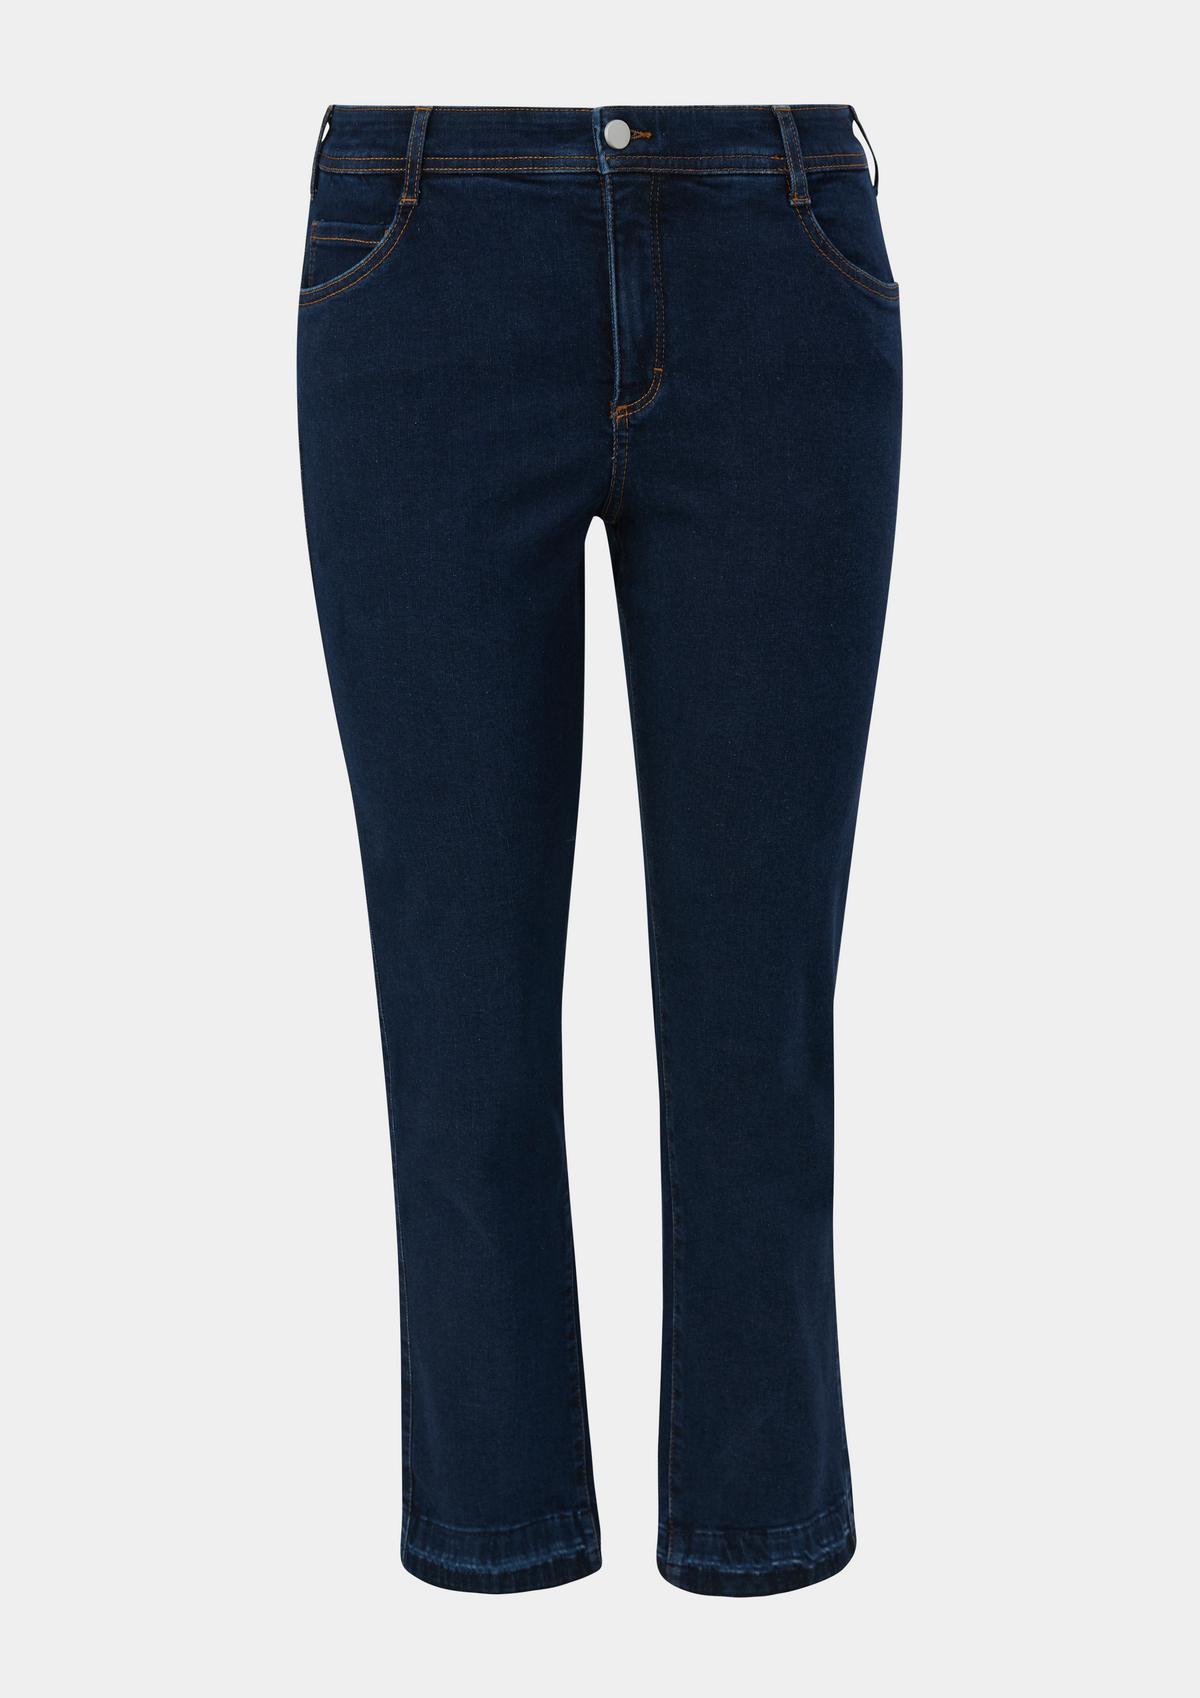 s.Oliver Jeans / regular fit / mid rise / slim leg / coloured stitching